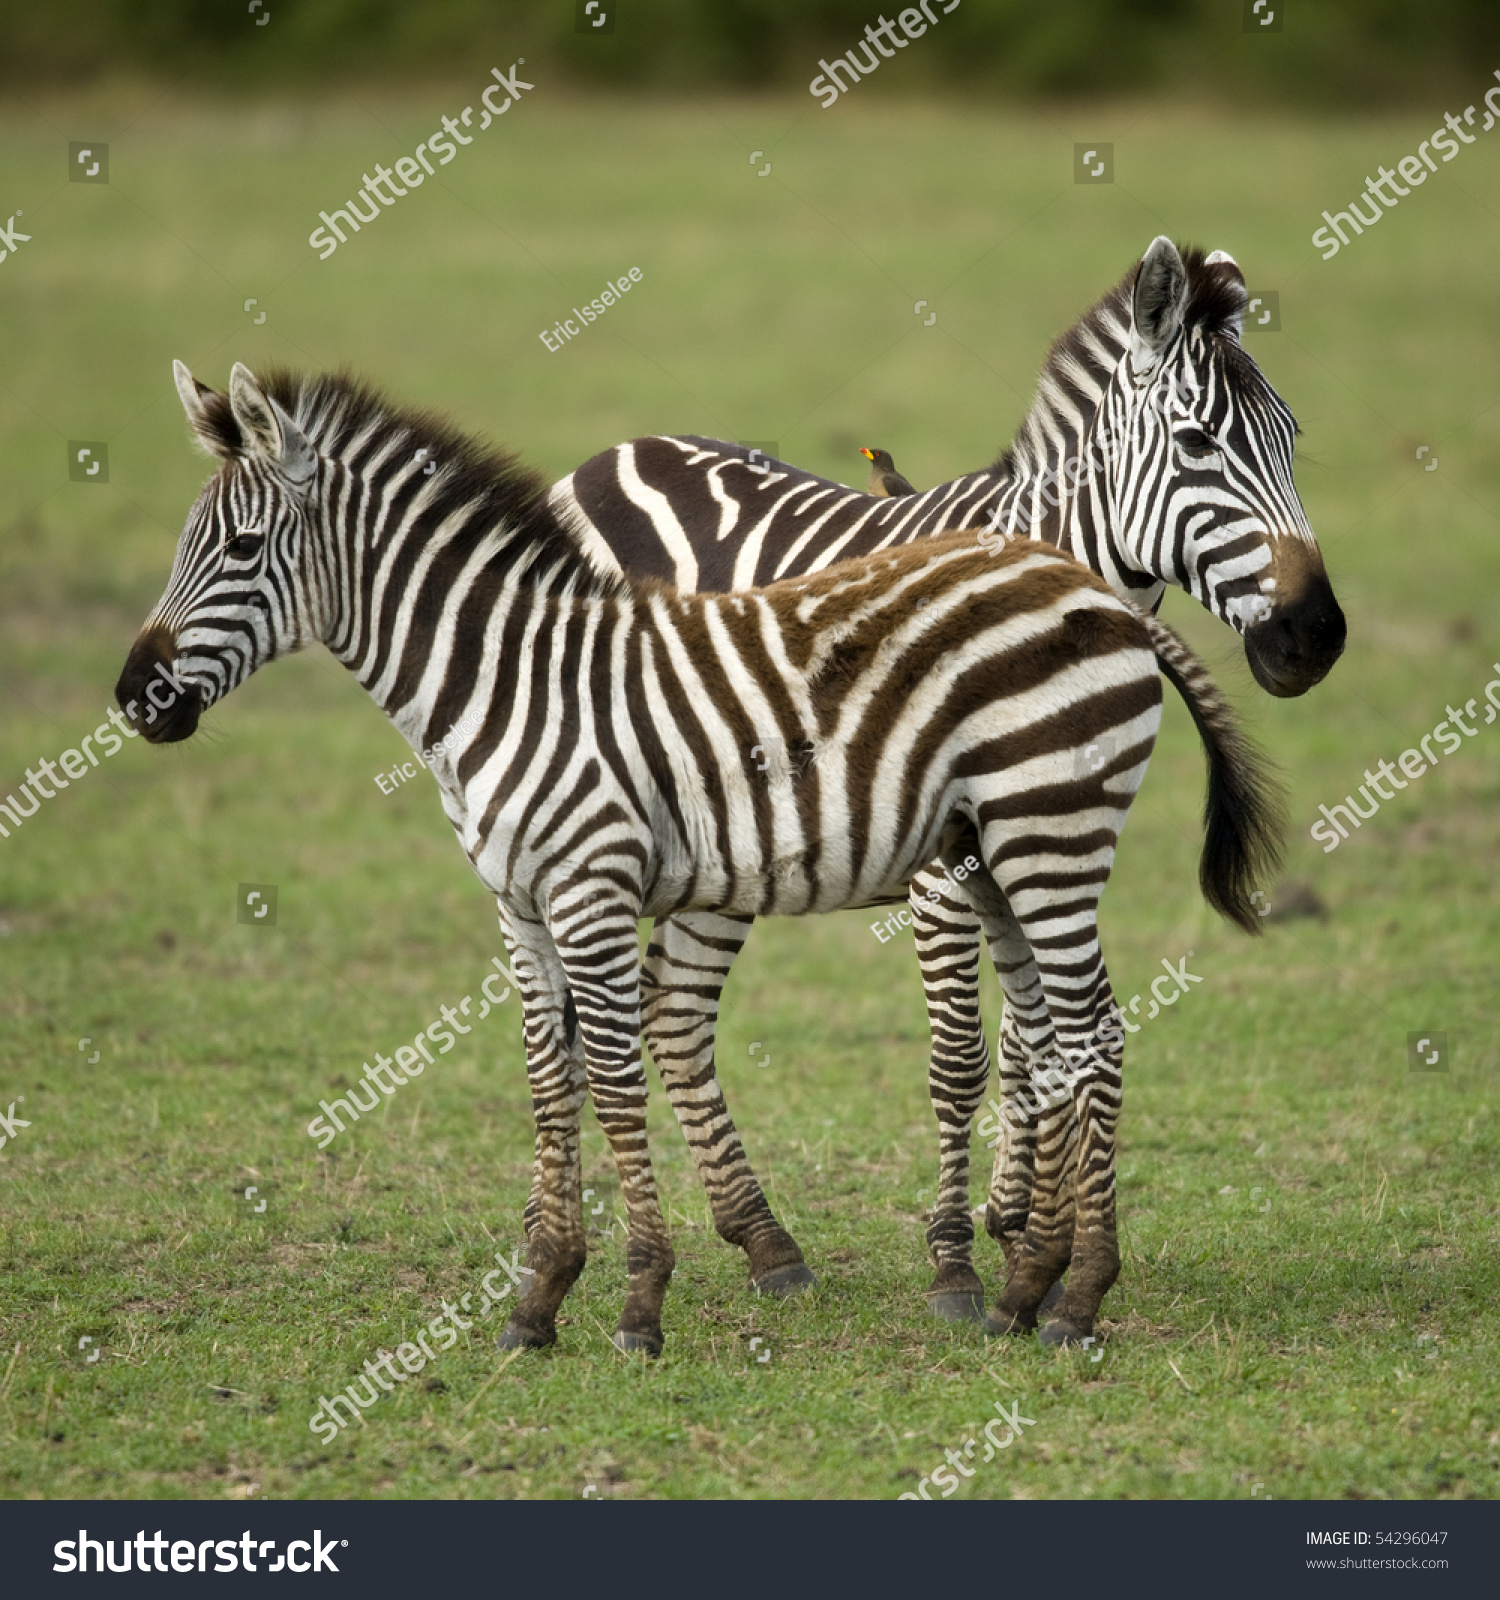 Two Zebras Standing Field Grass Stock Photo 54296047 - Shutterstock